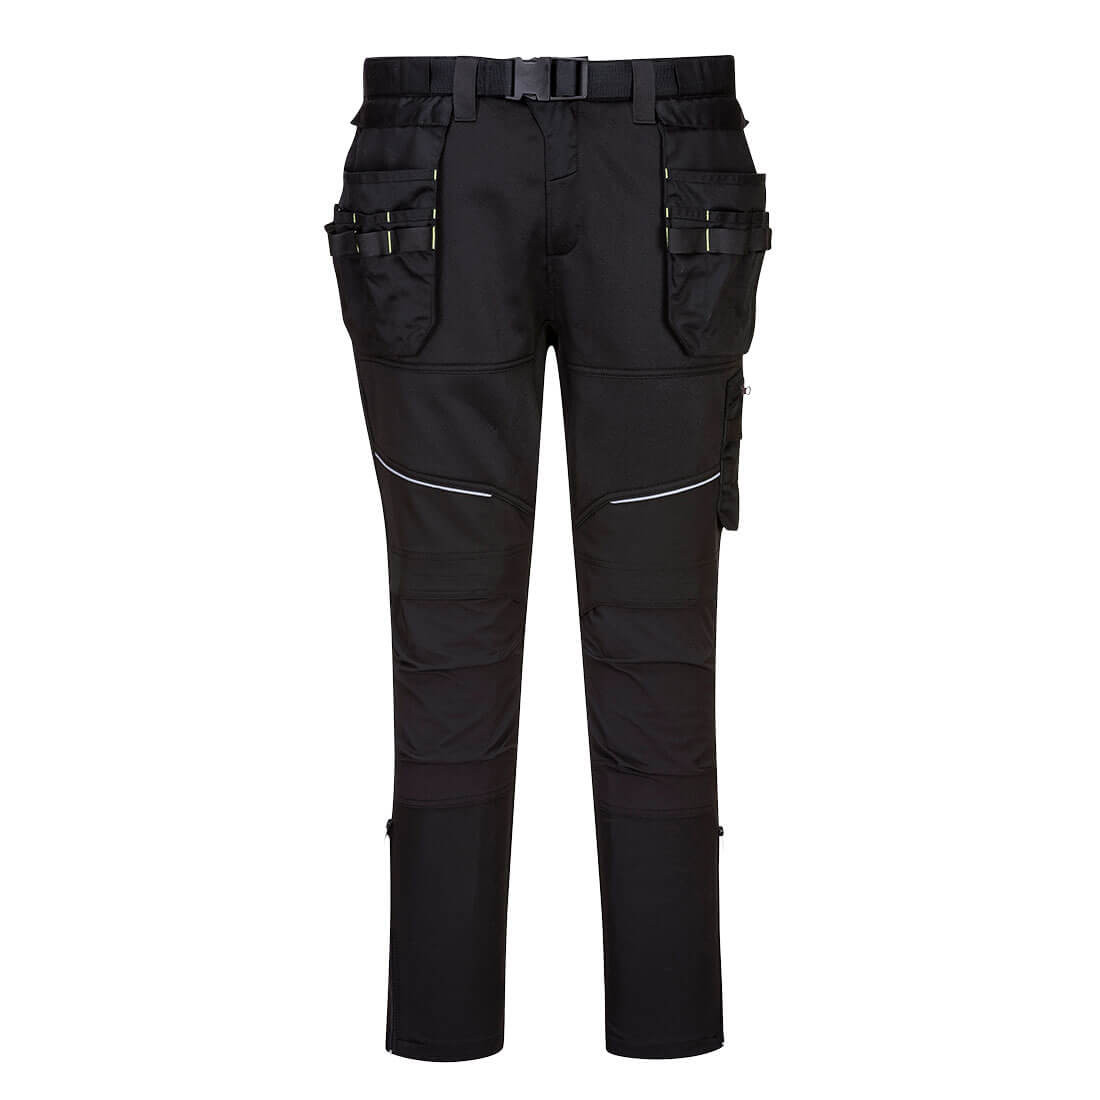 Pantaloni Holster KX3 - Imbracaminte de protectie